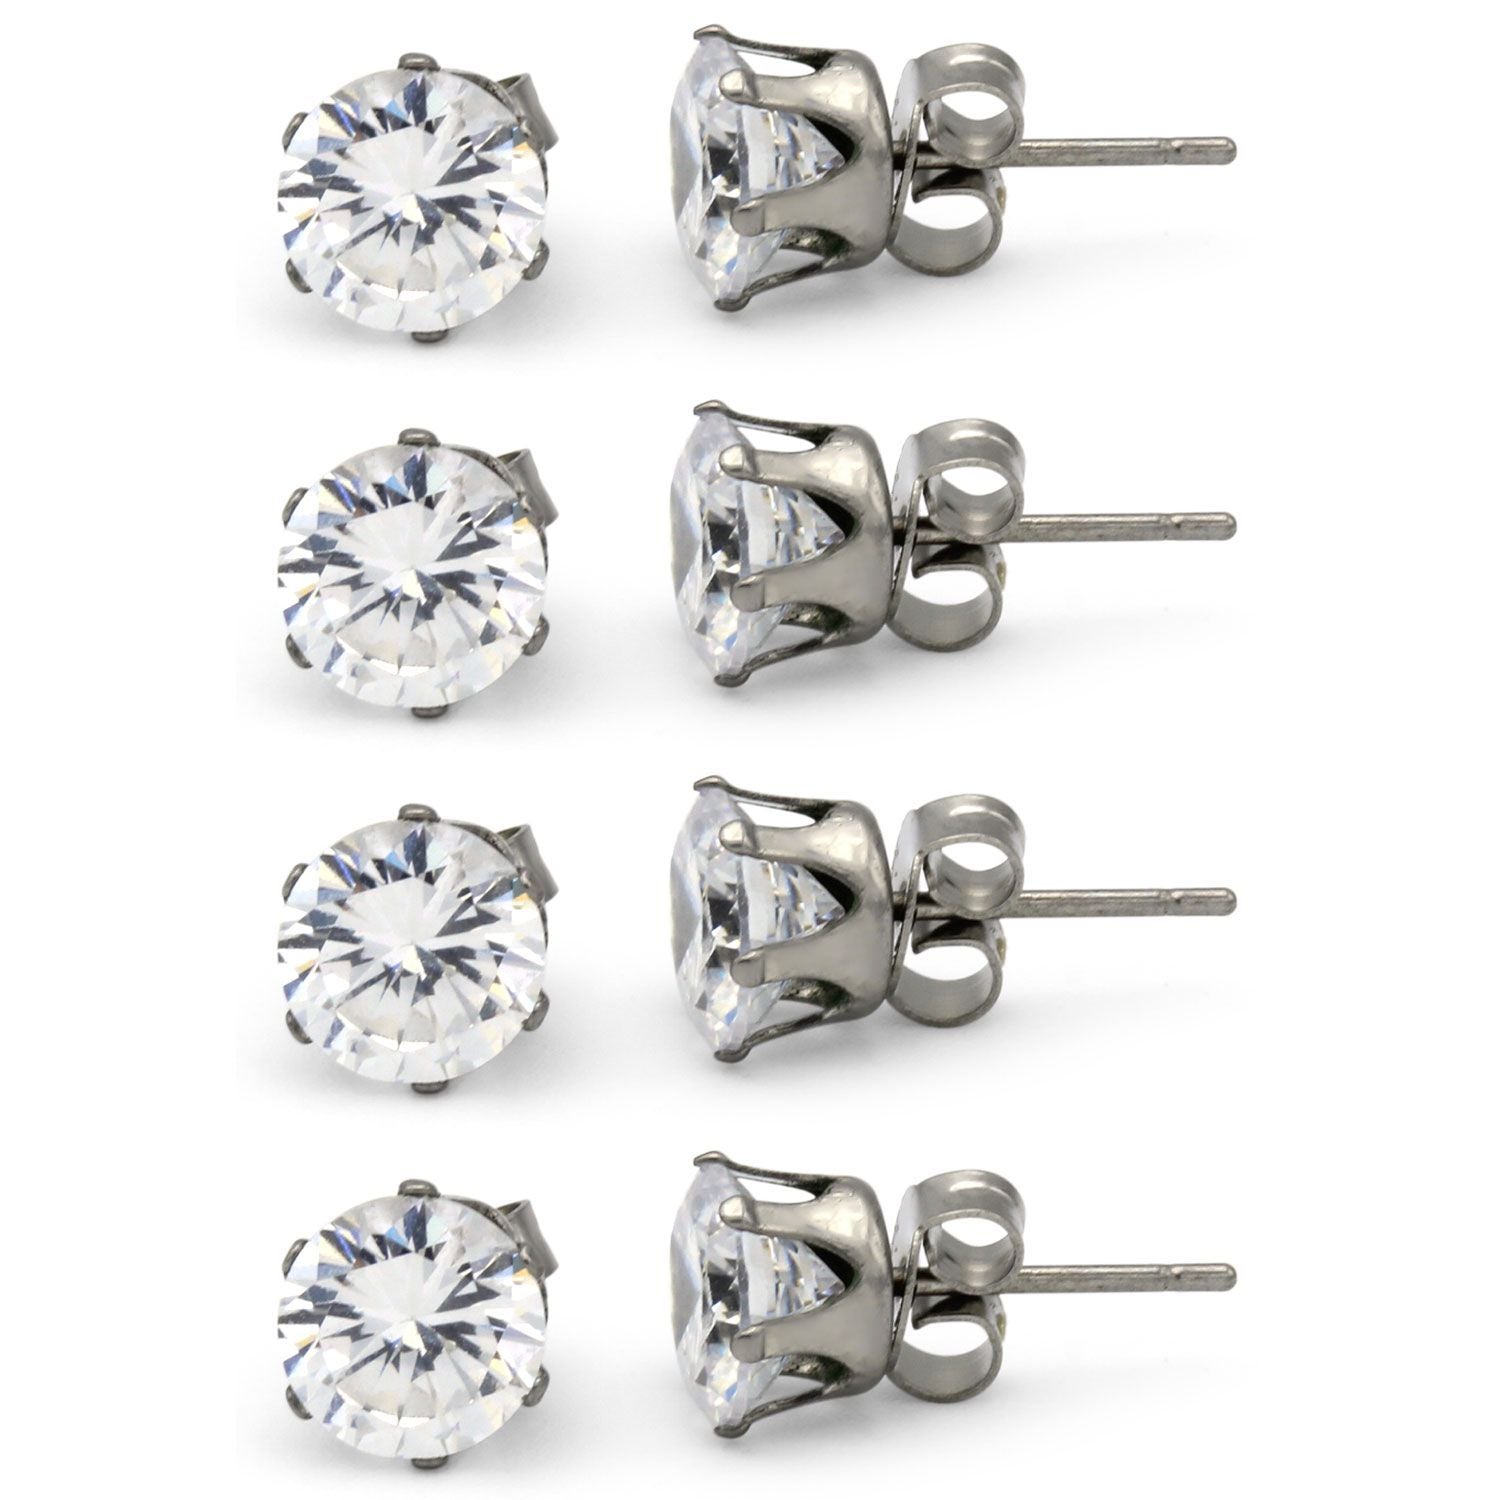 Cubic Zirconia Round Silver Stud Earrings Set Of 4 Stainless Steel Jewelry Men Women